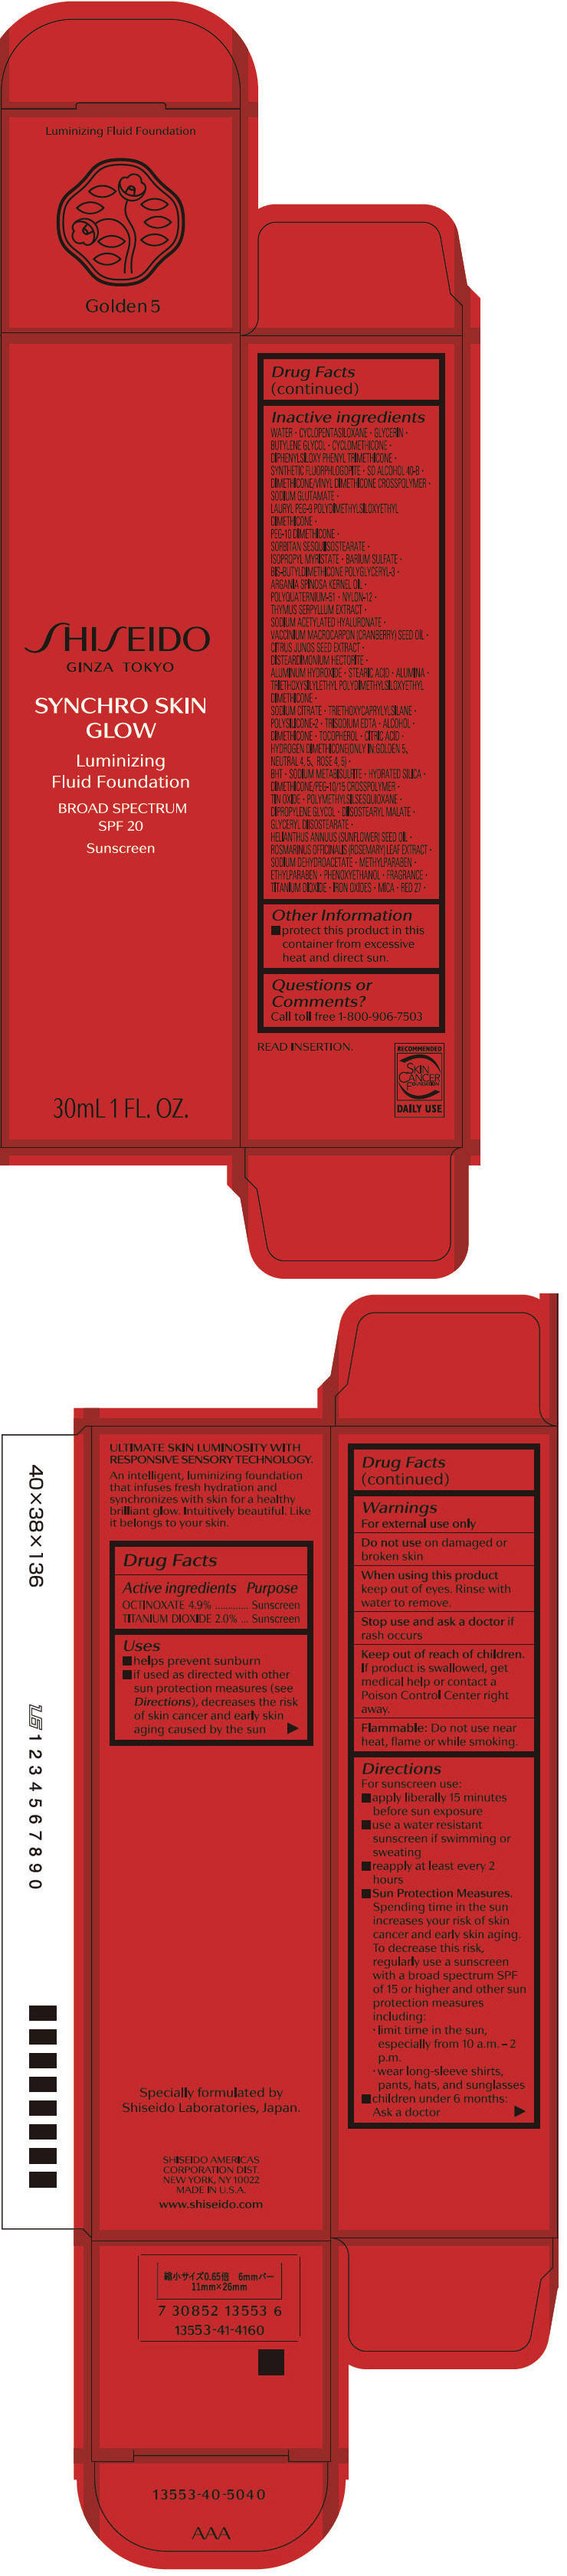 PRINCIPAL DISPLAY PANEL - 30 mL Bottle Carton - Golden 5